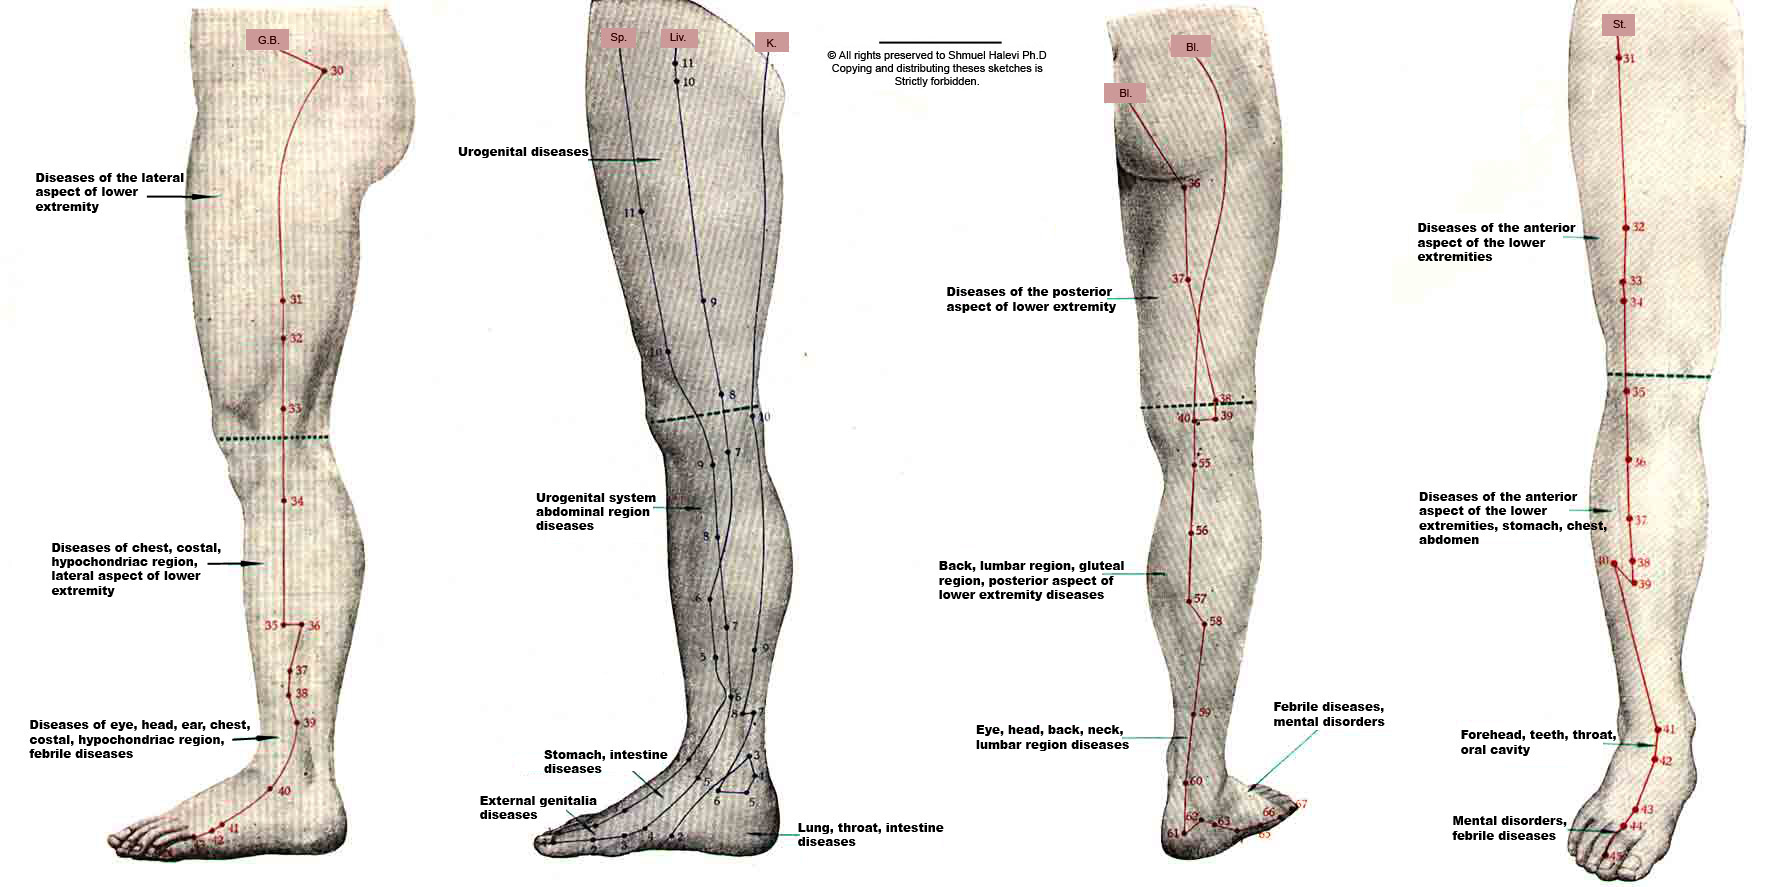 Size Chart Legs